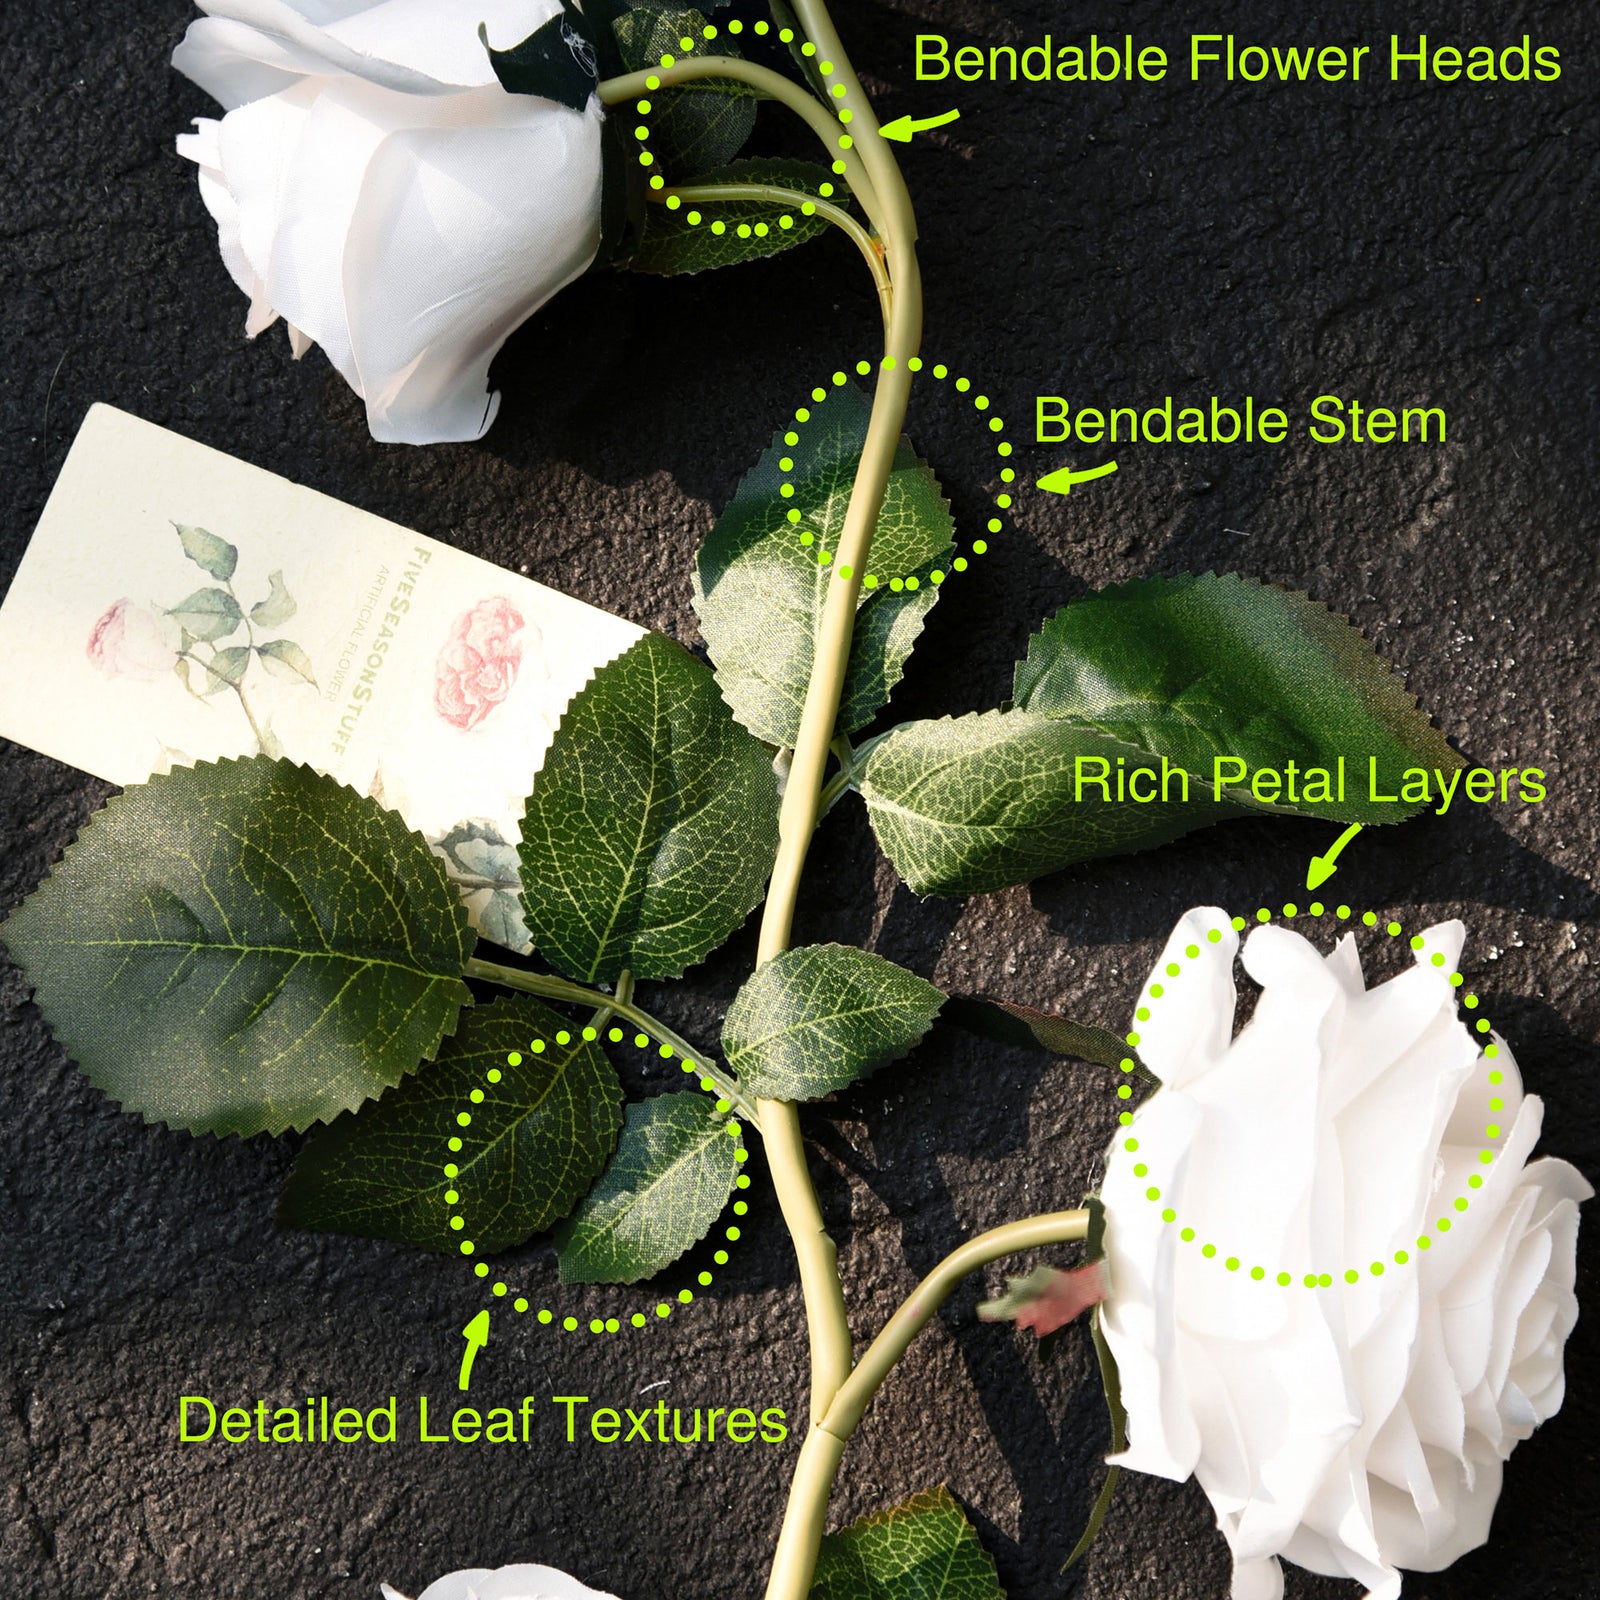 FiveSeasonStuff 2 Pcs Bendable Flower Garland Artificial Silk Rose Vine Leaves Hanging Face Flowers for Wall Decoration, Wreaths (White)